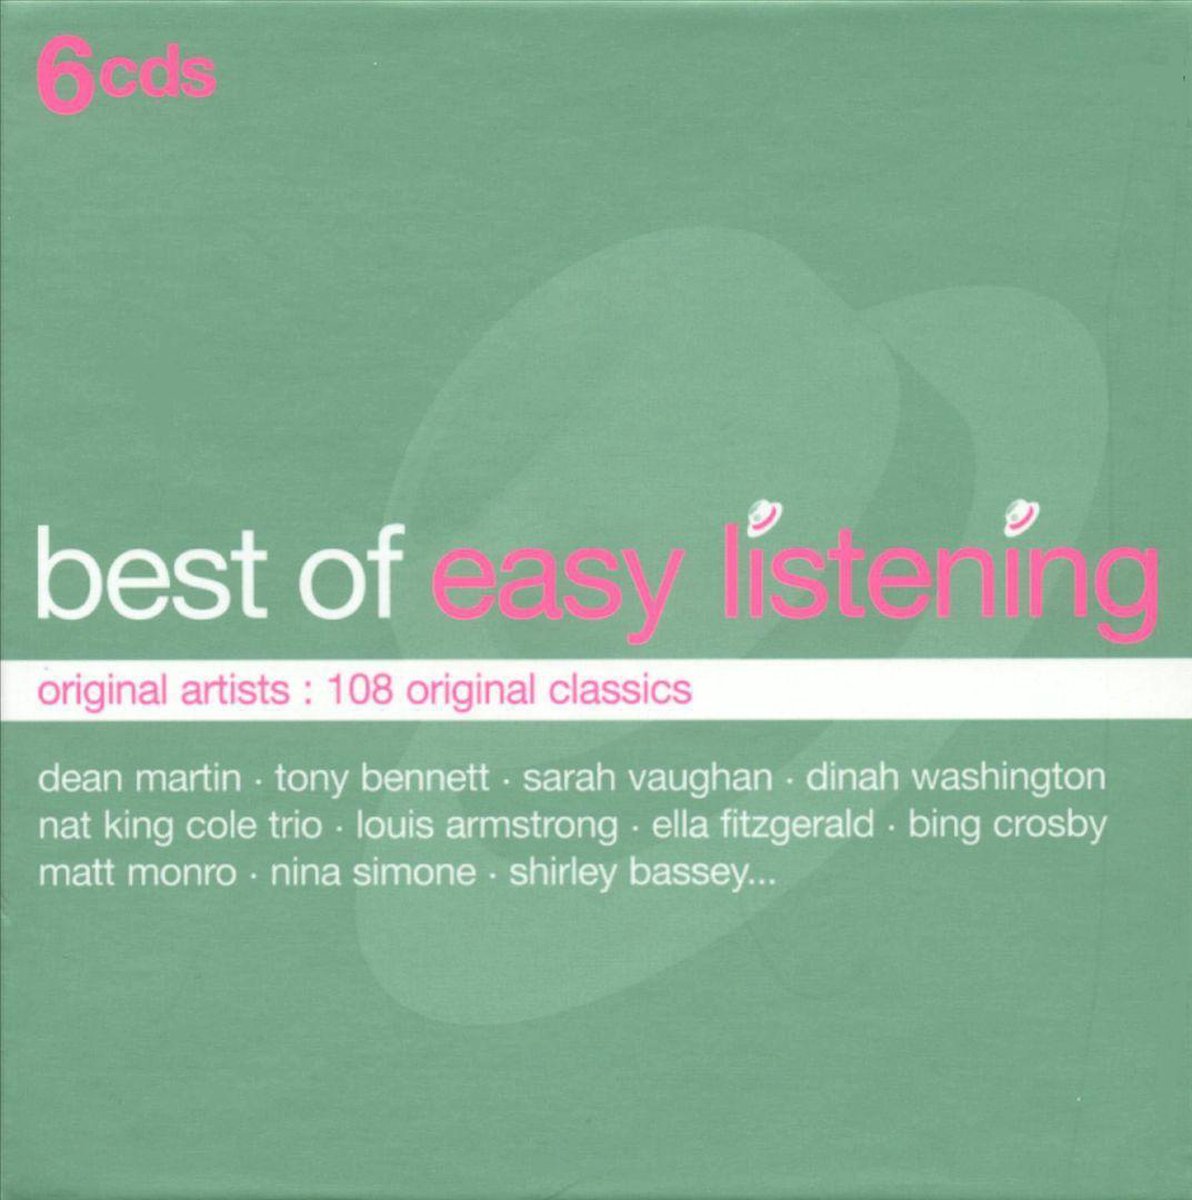 Best Of Easy Listening - various artists